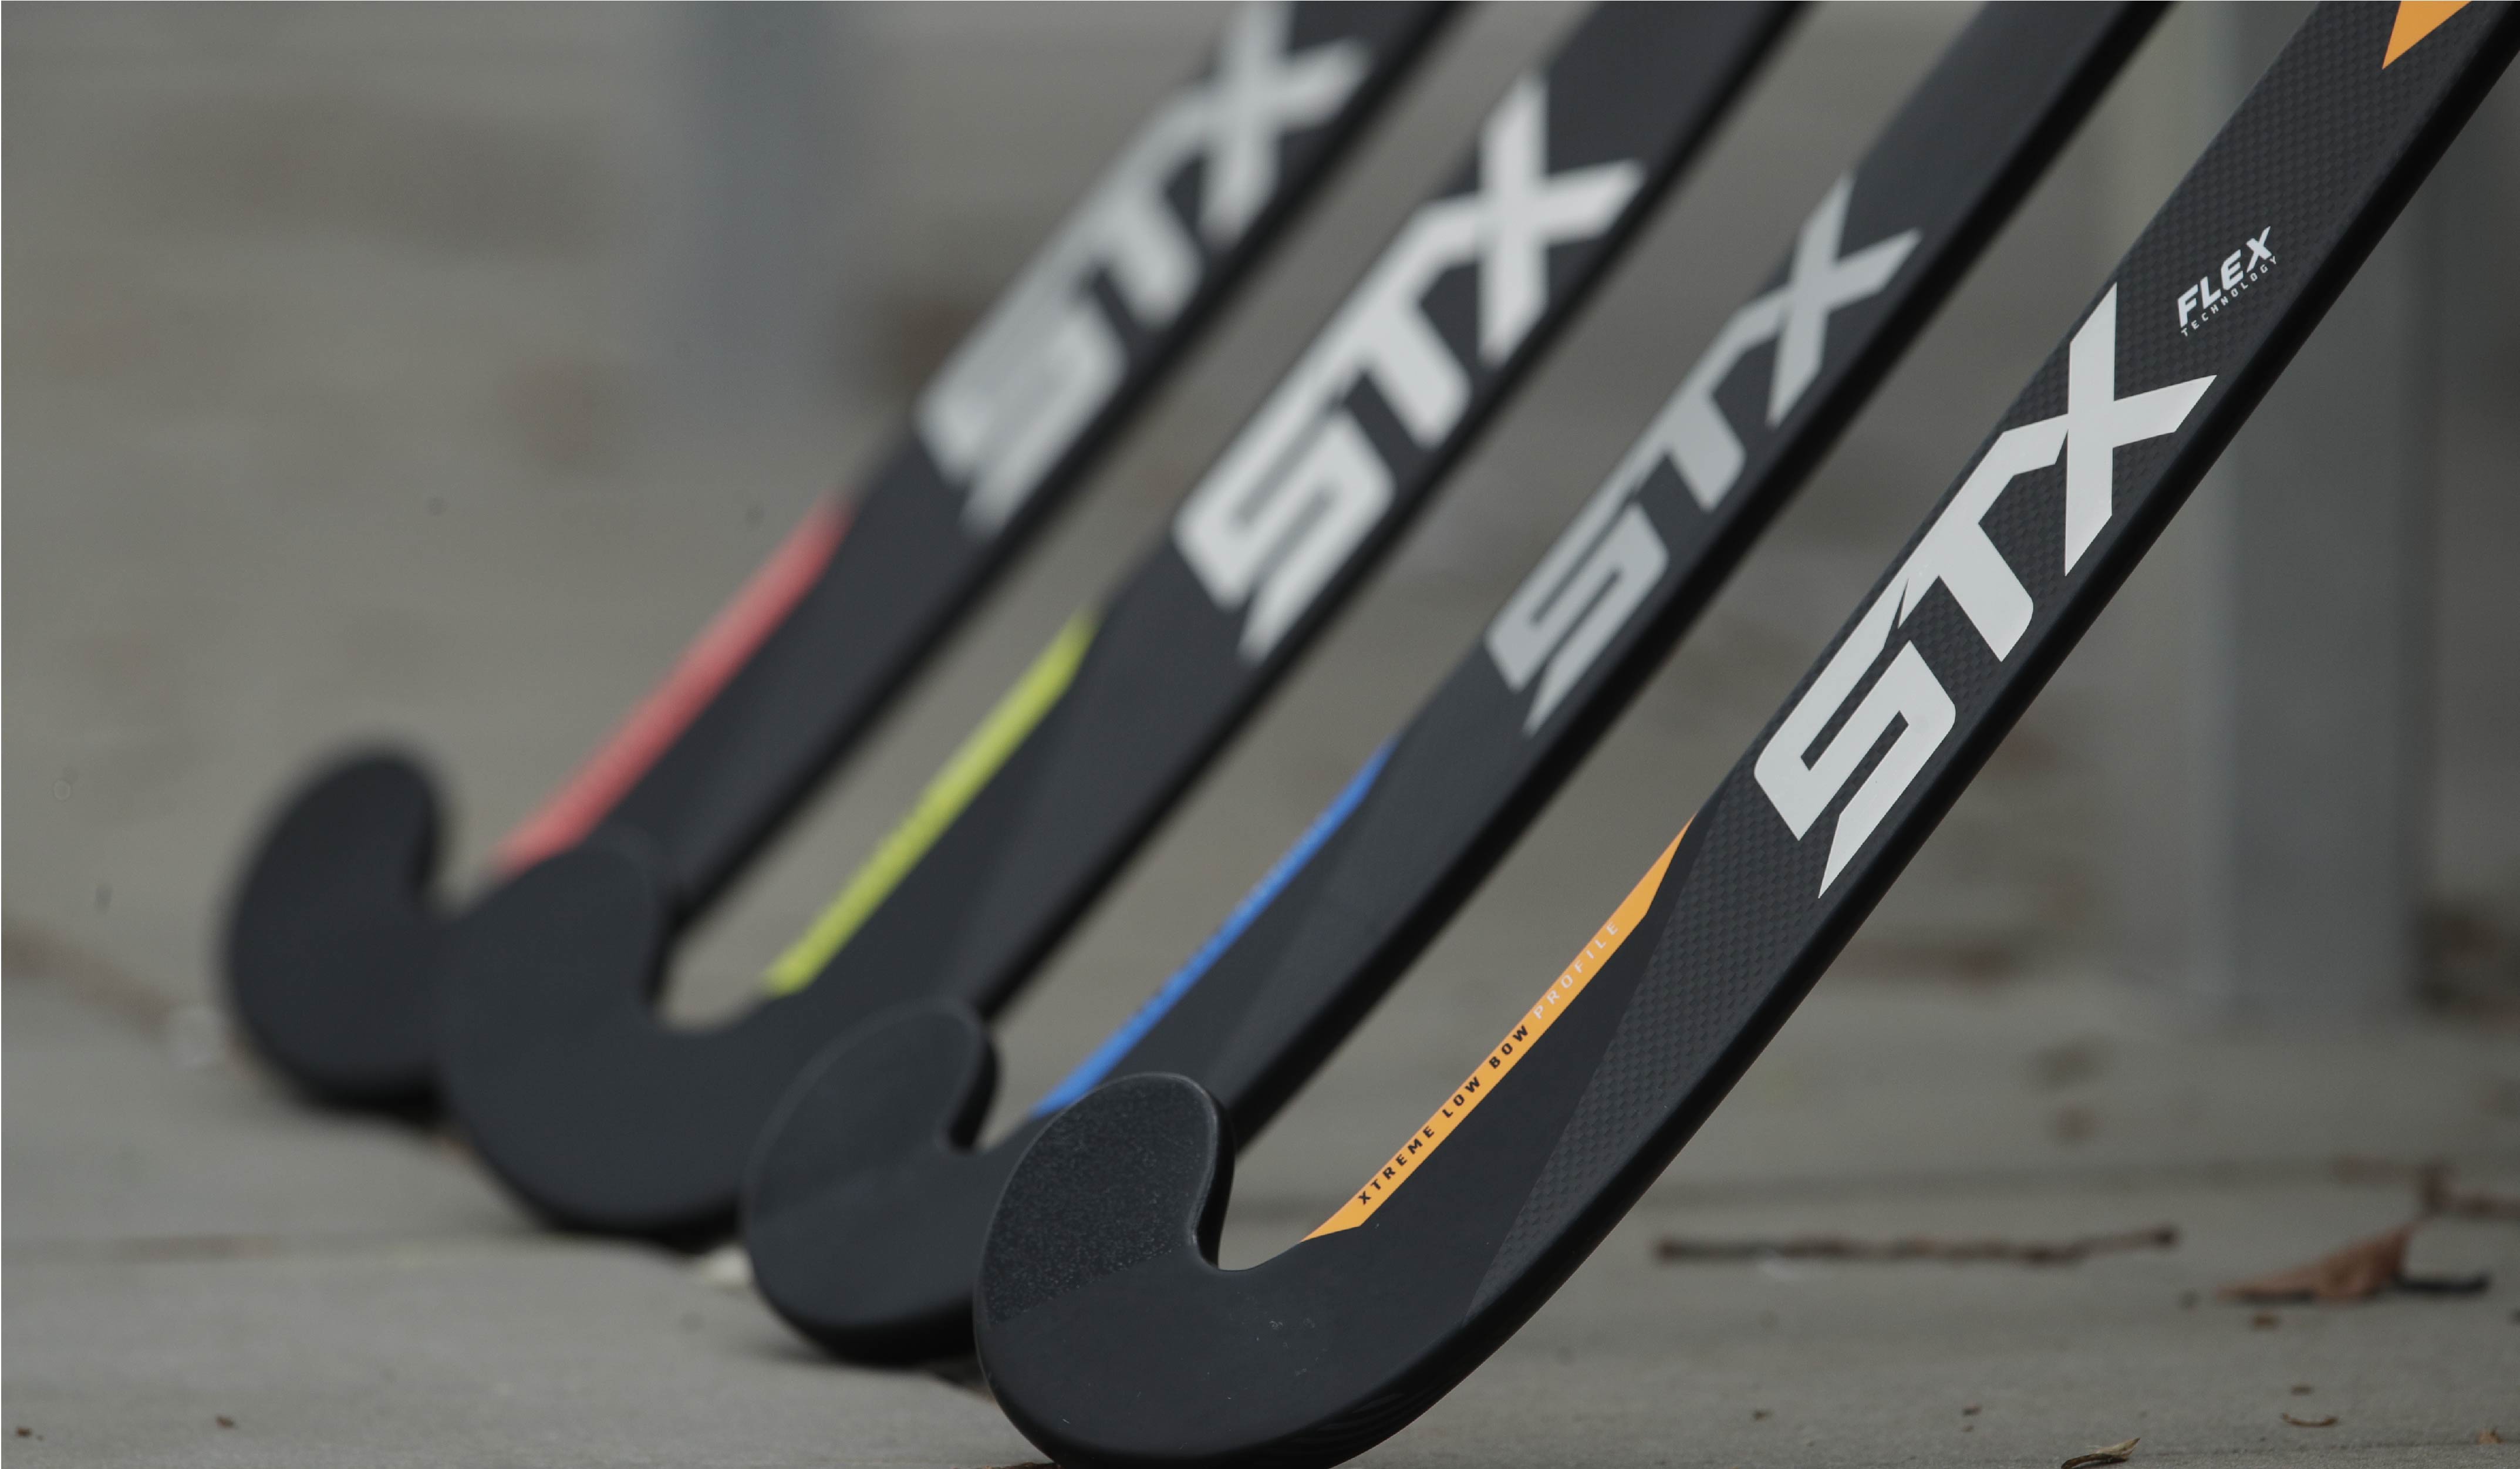 Retails for $409.99 STX Stallion HPR 901 Senior Field Hockey Stick NEW 